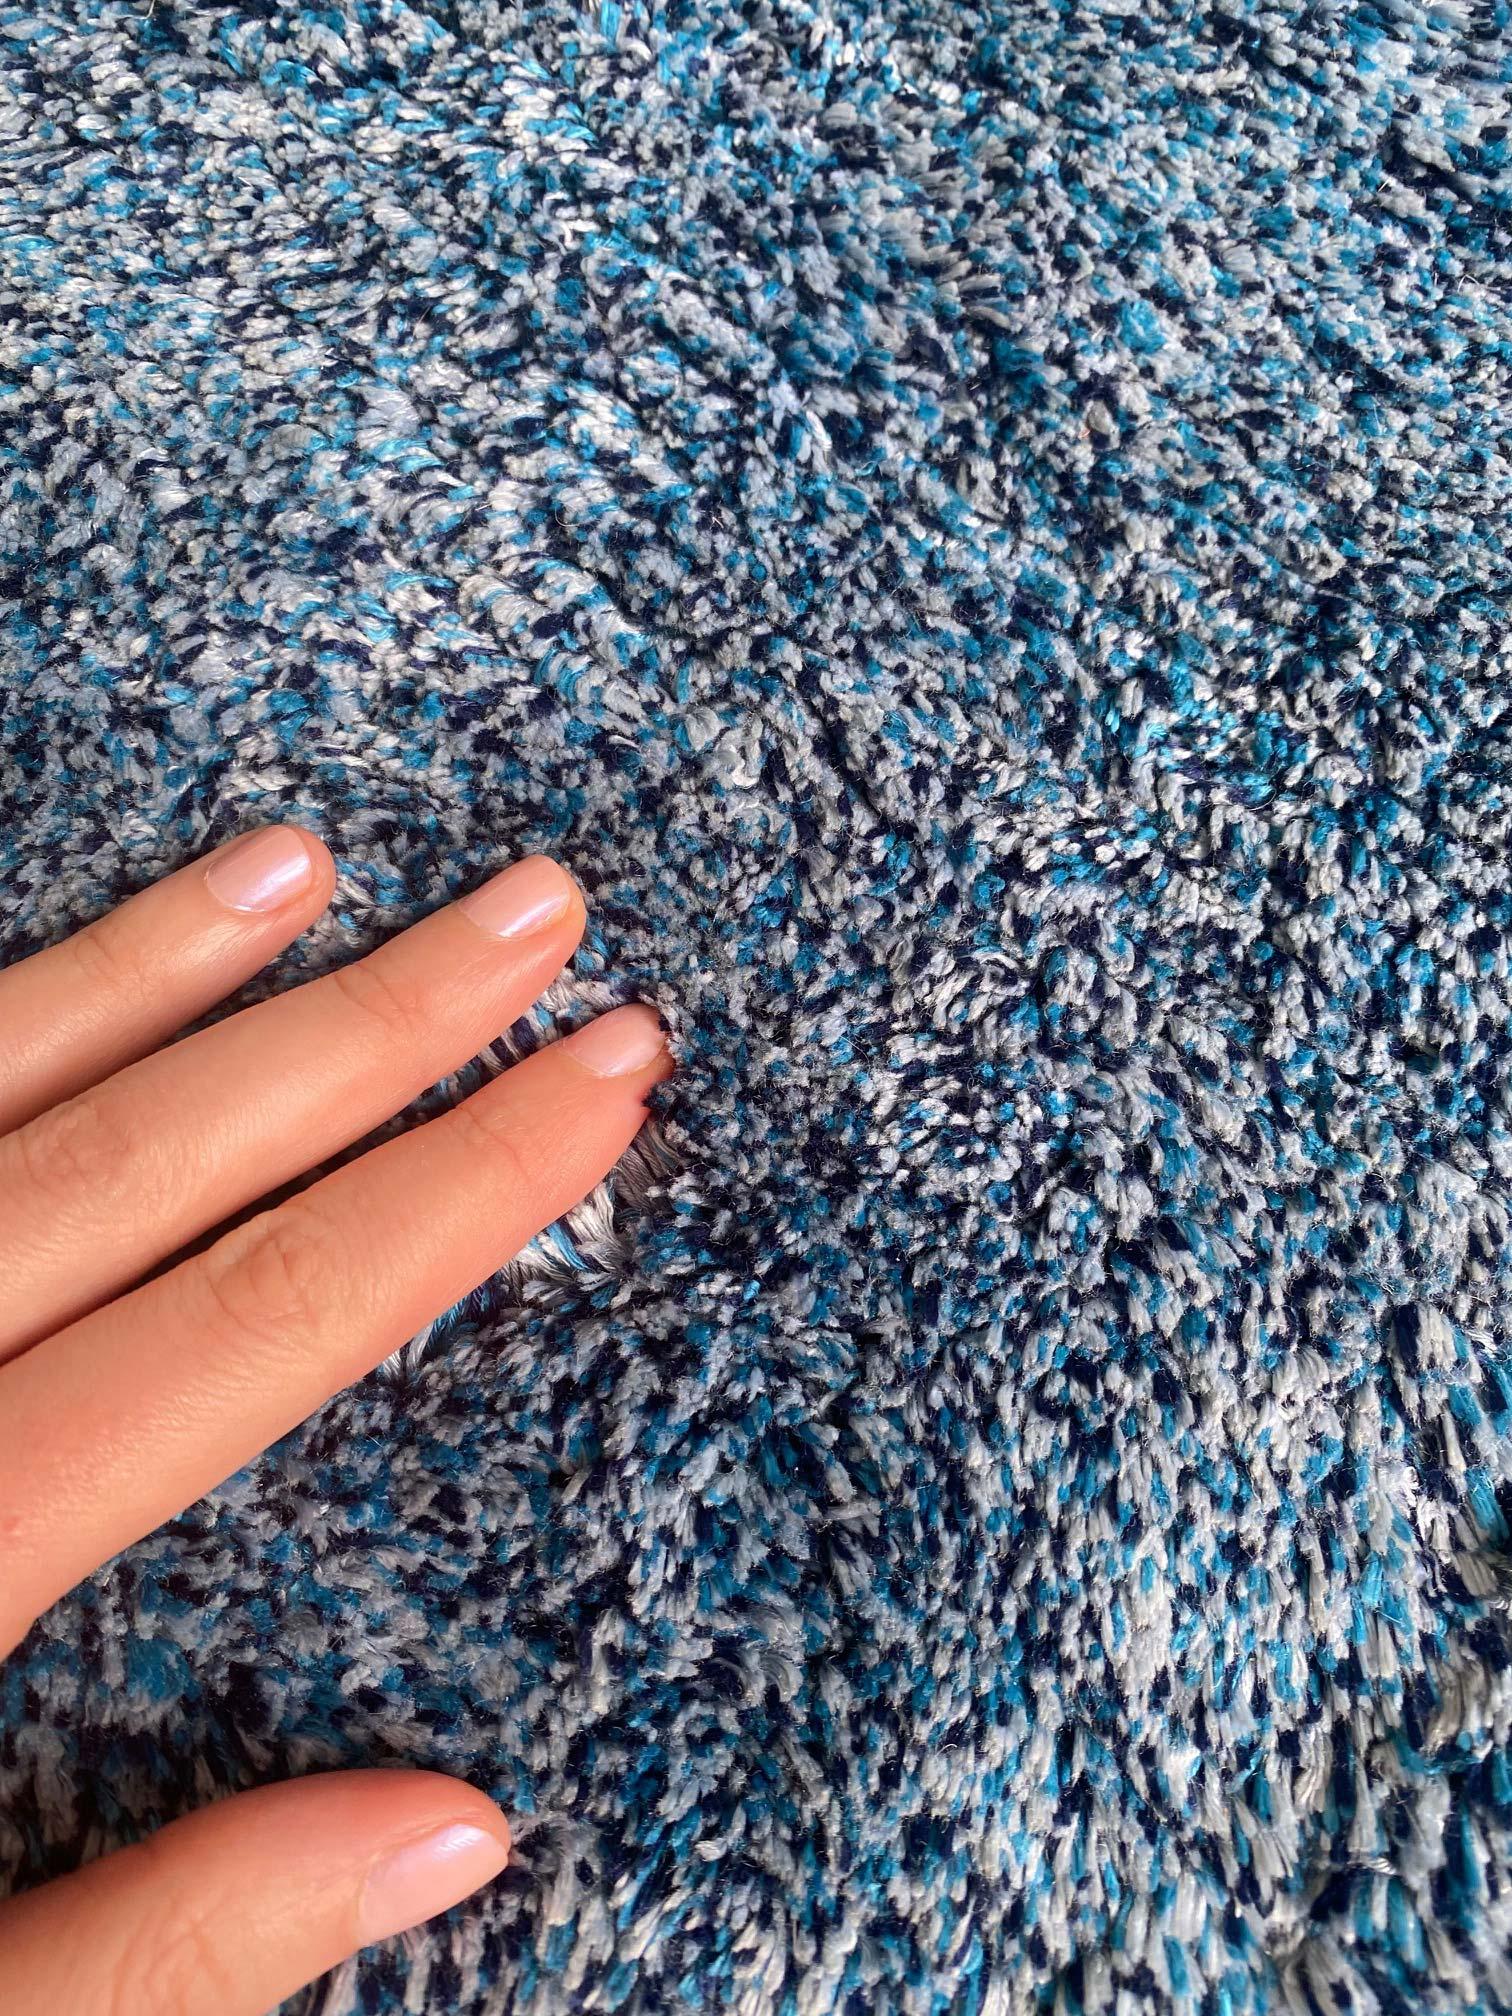 Mid-20th century French Modern blue handmade wool rug.
Size: 7'2